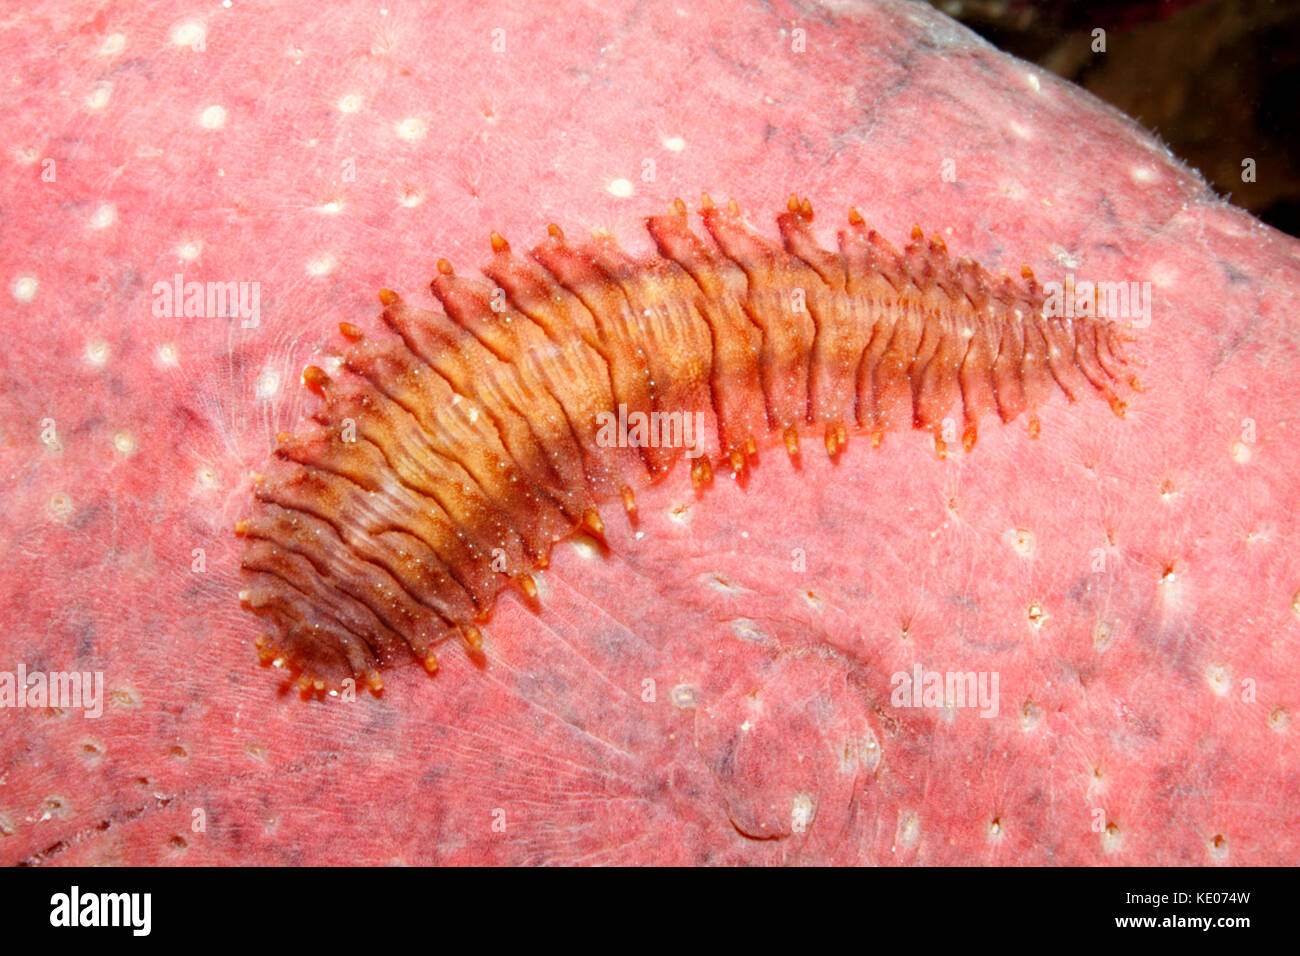 Sea Cucumber Scale Worm, Gastrolepidia clavigera, crawling on its host holothurian. Stock Photo